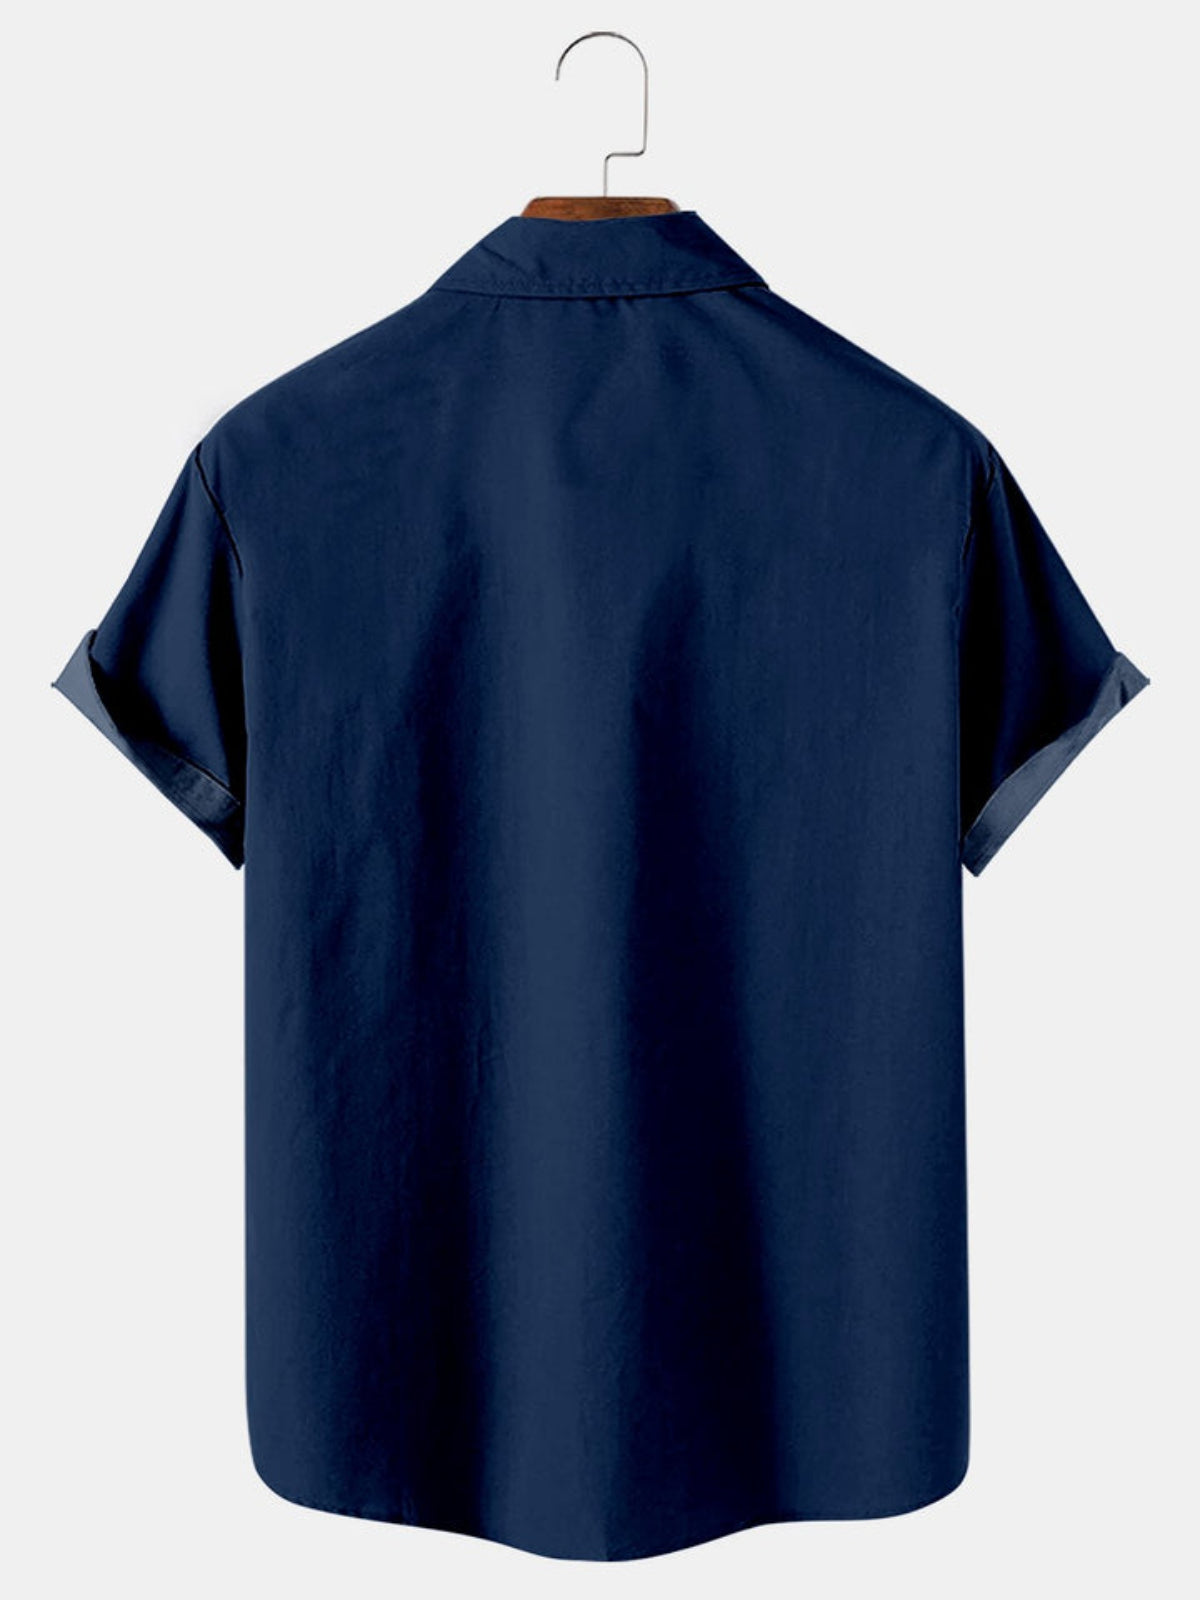 Palm Tree Printed Short Sleeve Shirt